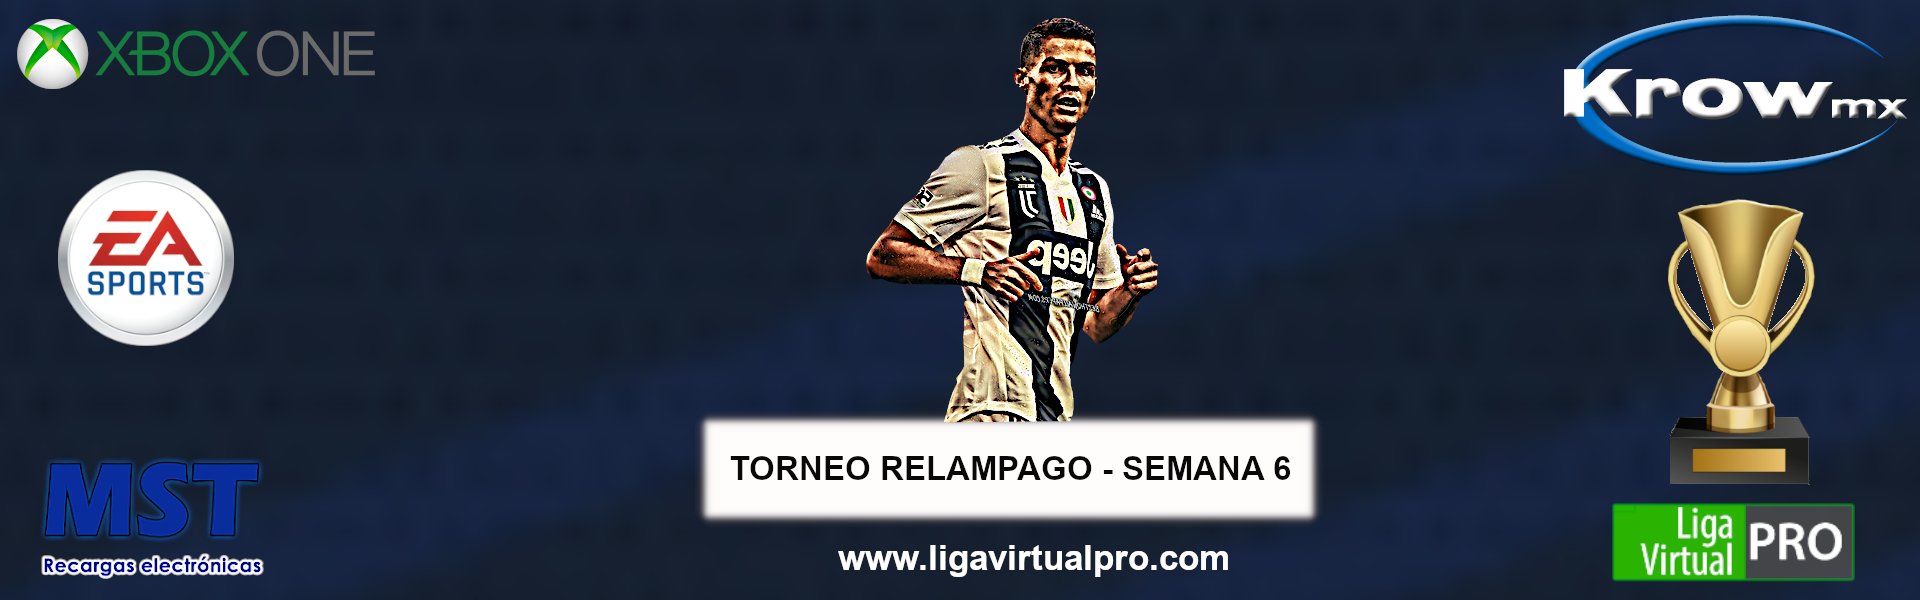 Logo-TORNEO RELAMPAGO - SEMANA 6